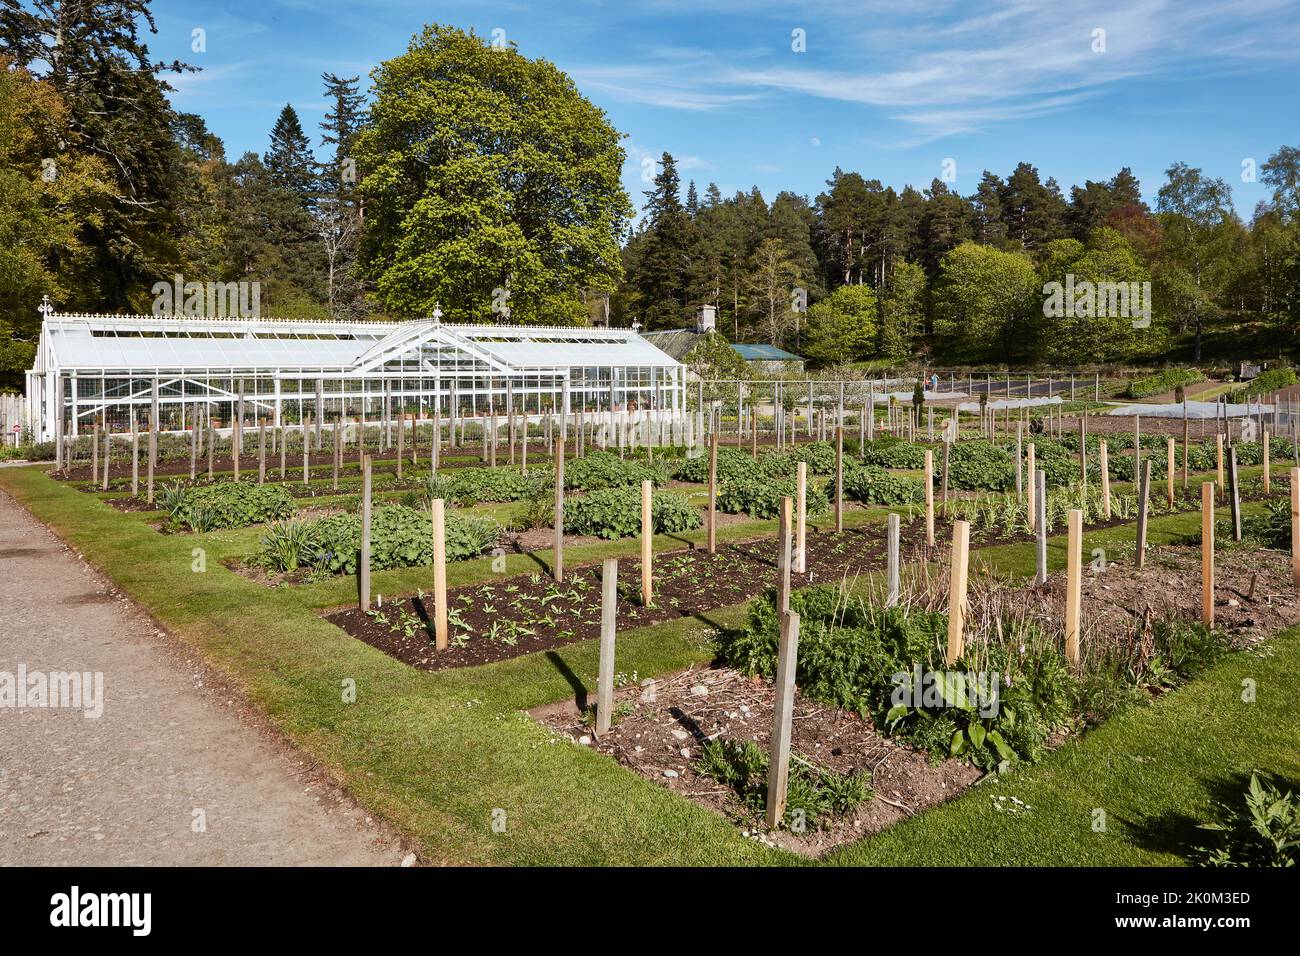 Schottland, Balmoral, Balmoral Castle, 2019, Mai, 14: Die Gärten von Balmoral Castle, Royal Deeside, Schottland. Stockfoto